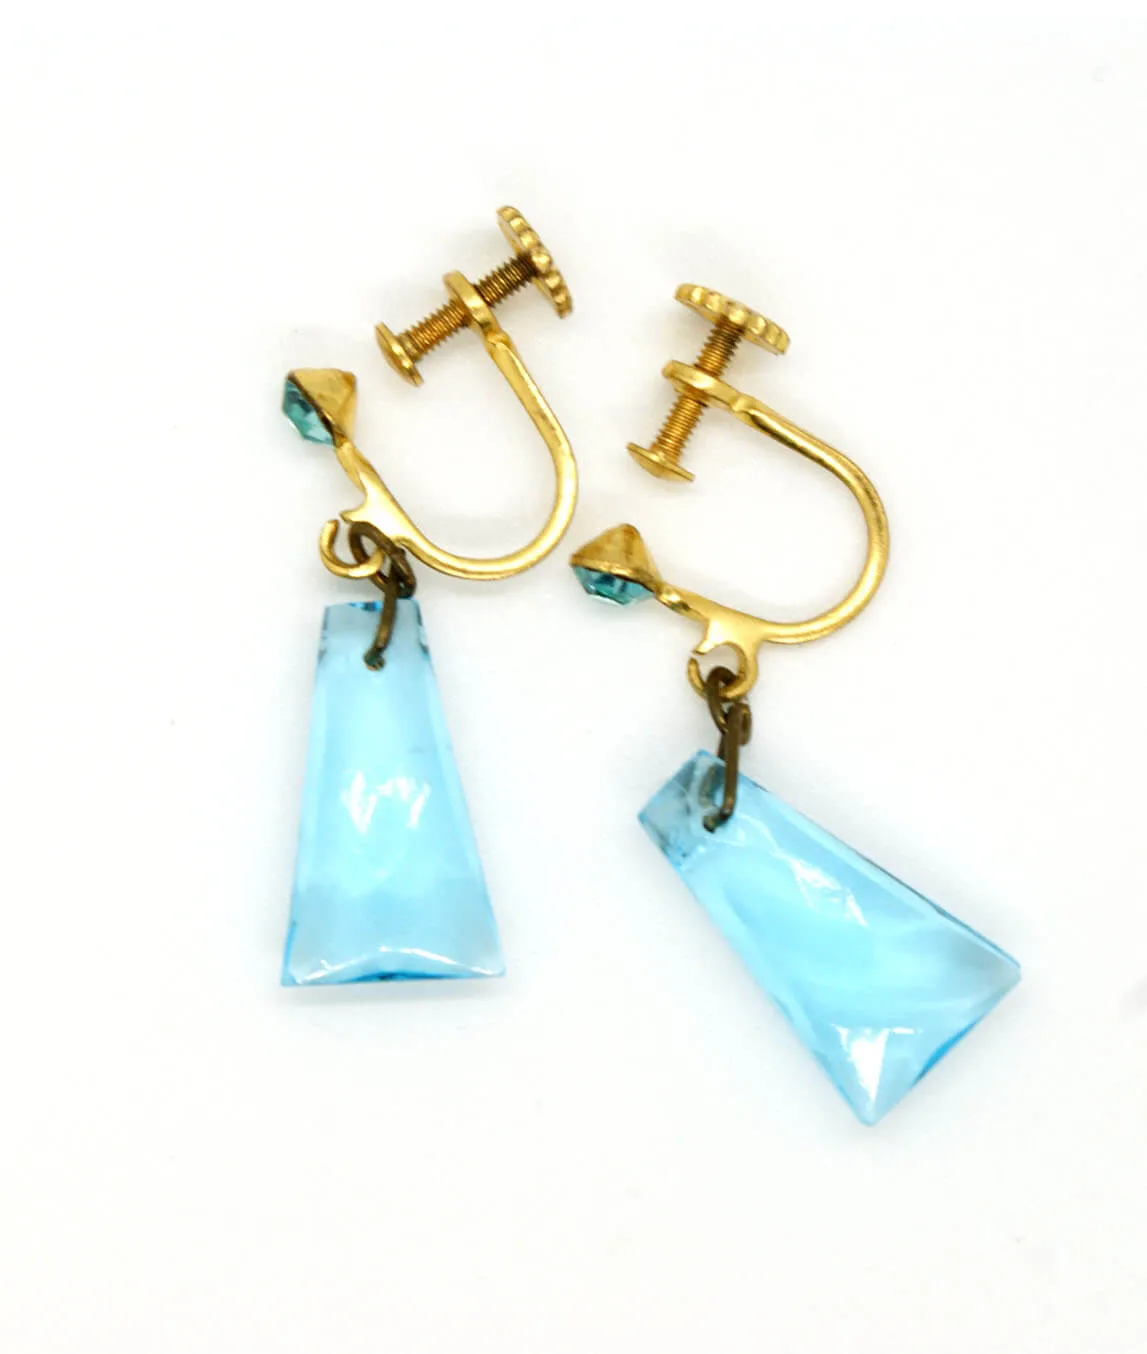 Vintage blue glass dangle earrings